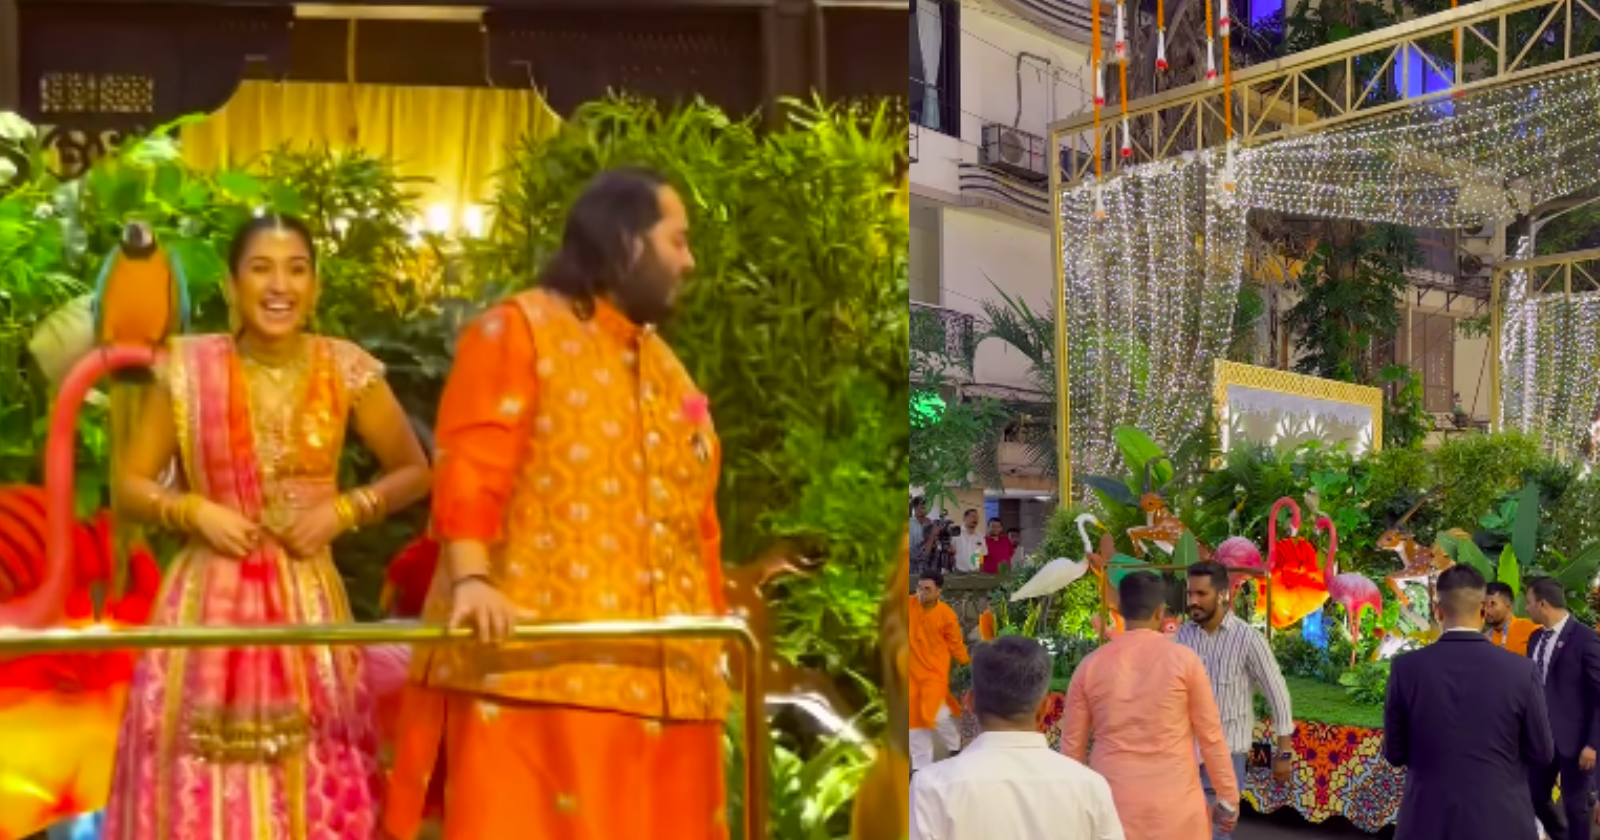 WATCH Anant Ambani and Radhika Merchant039s Wedding Jungle Themed 039Rath039 Arrives